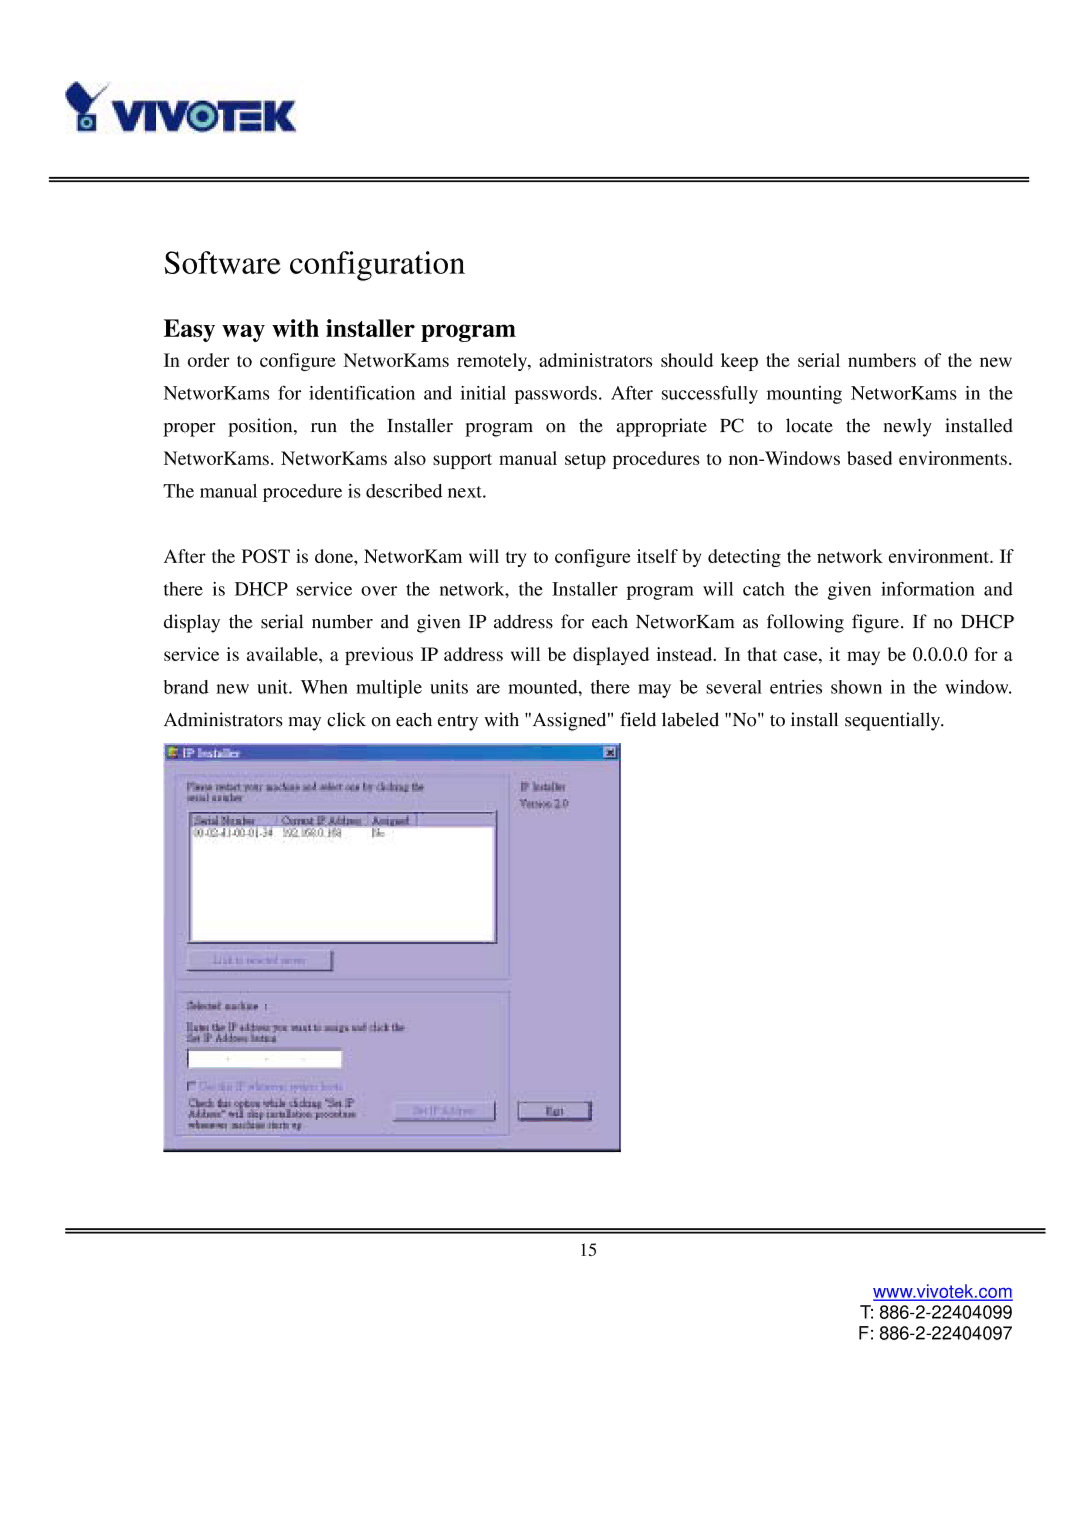 Vivotek IP2121, IP2111 user manual Software configuration, Easy way with installer program 